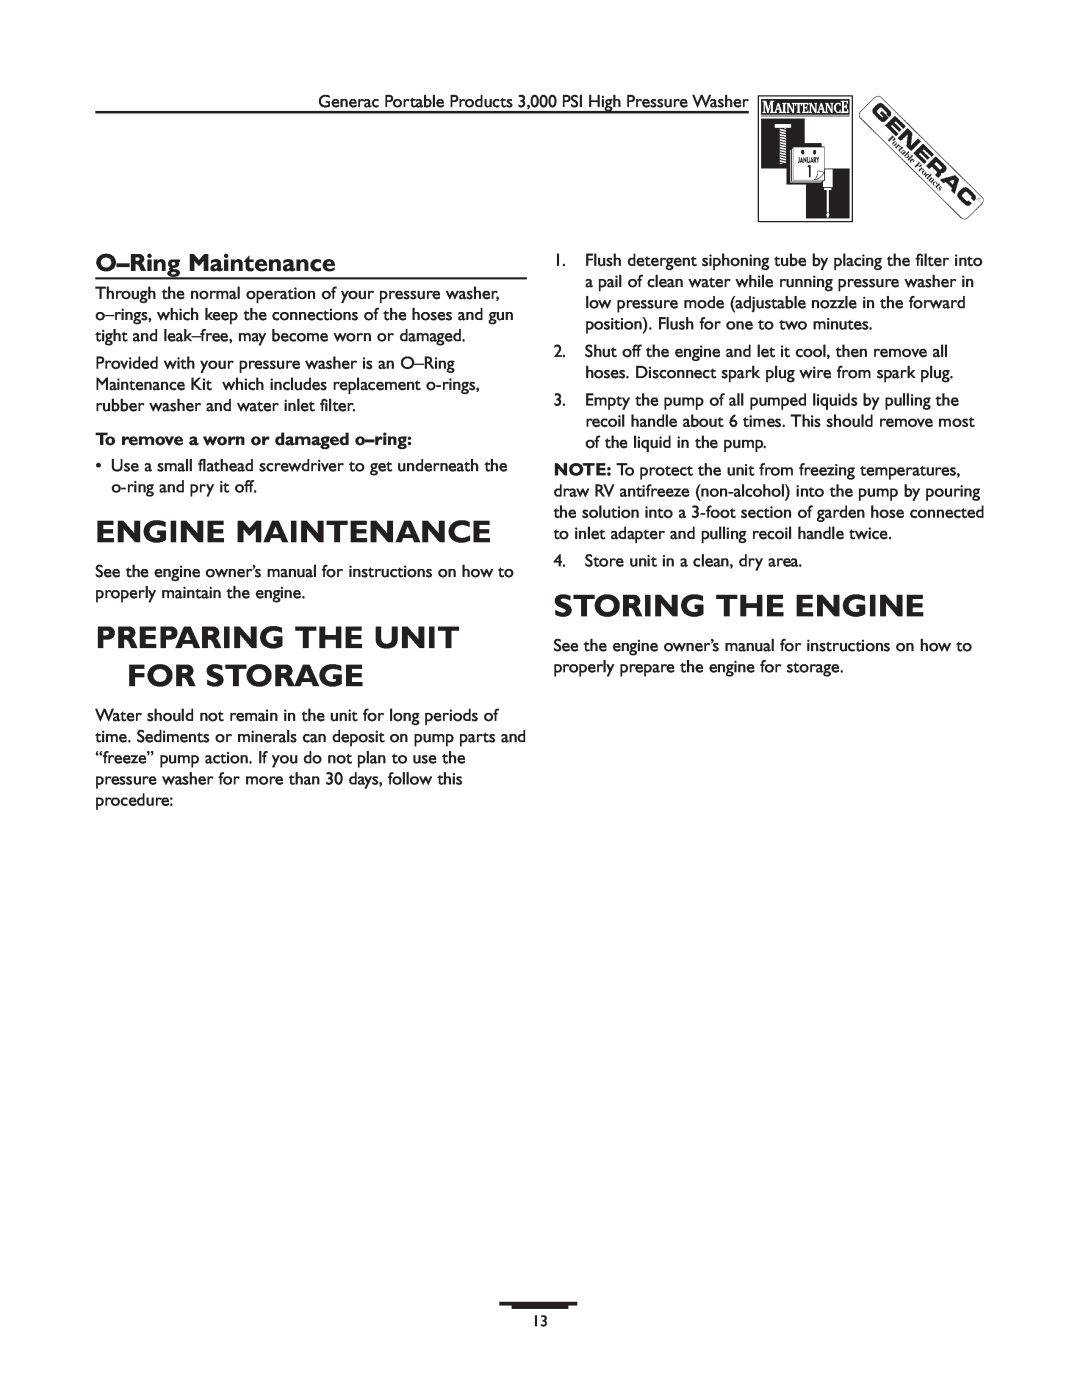 Generac 1418-0 manual Engine Maintenance, Preparing The Unit For Storage, Storing The Engine, O-Ring Maintenance 